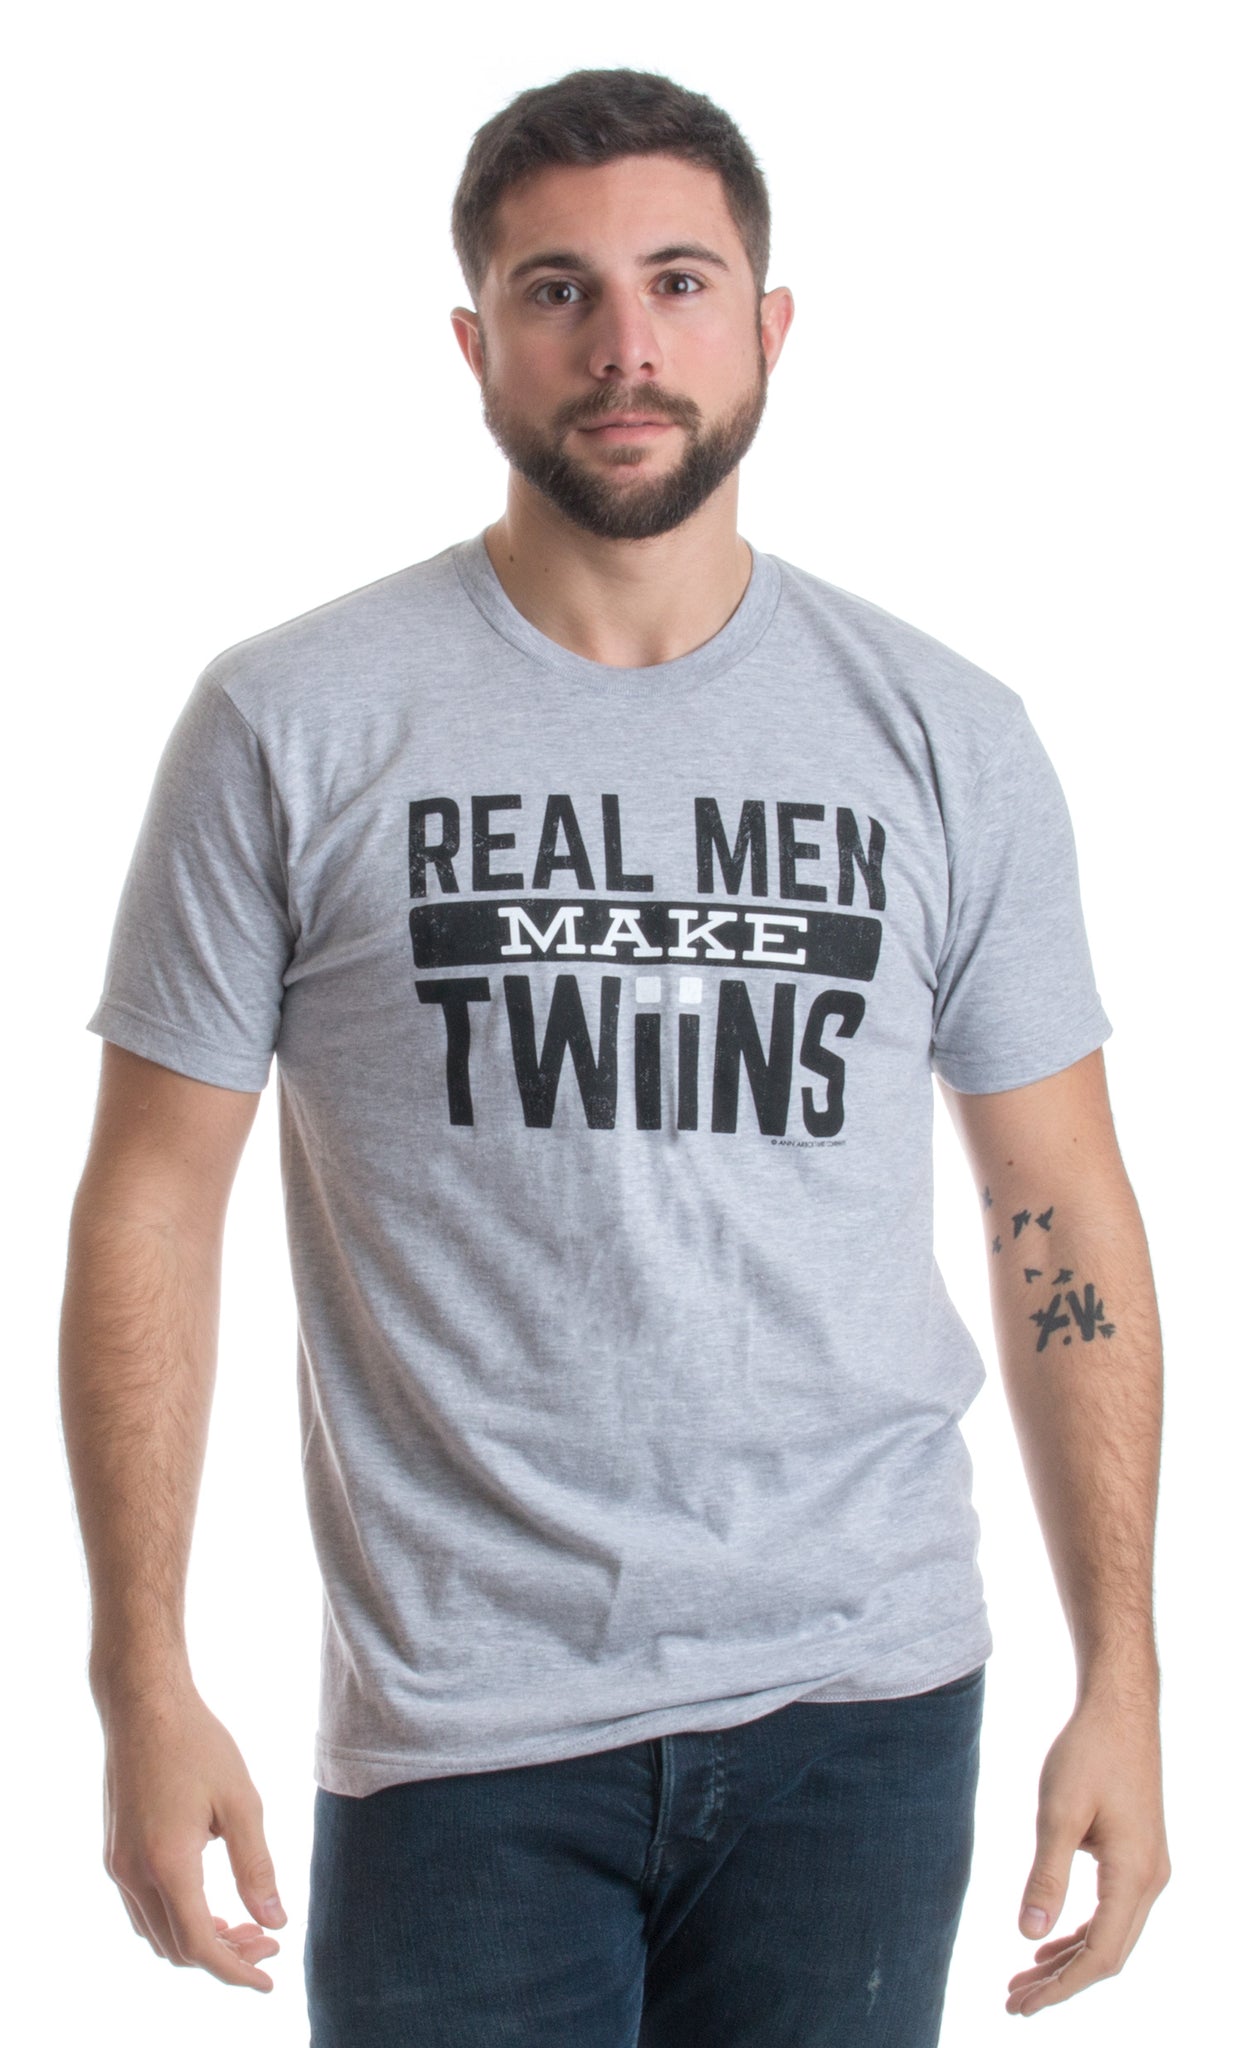 real men make twins shirt